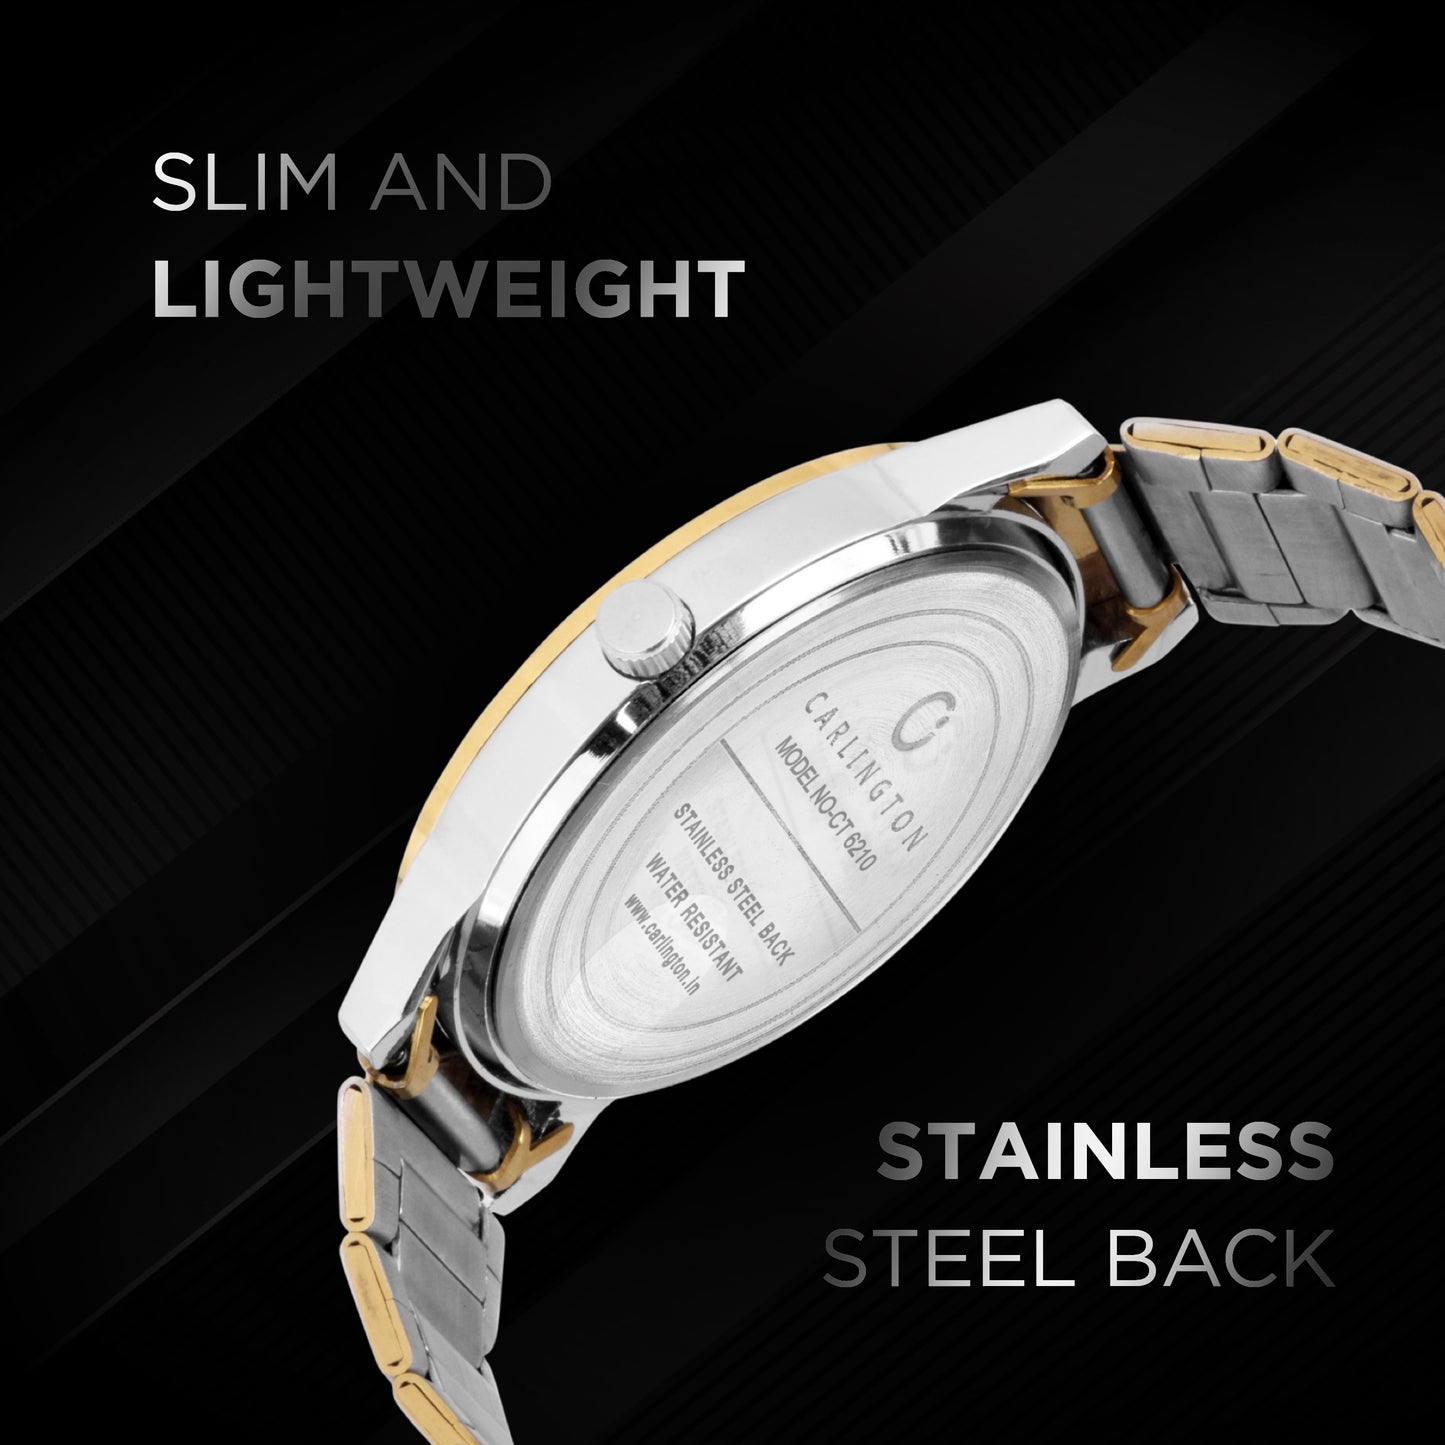 Carlington Men Stainless Steel Watch-CT6210 Gold